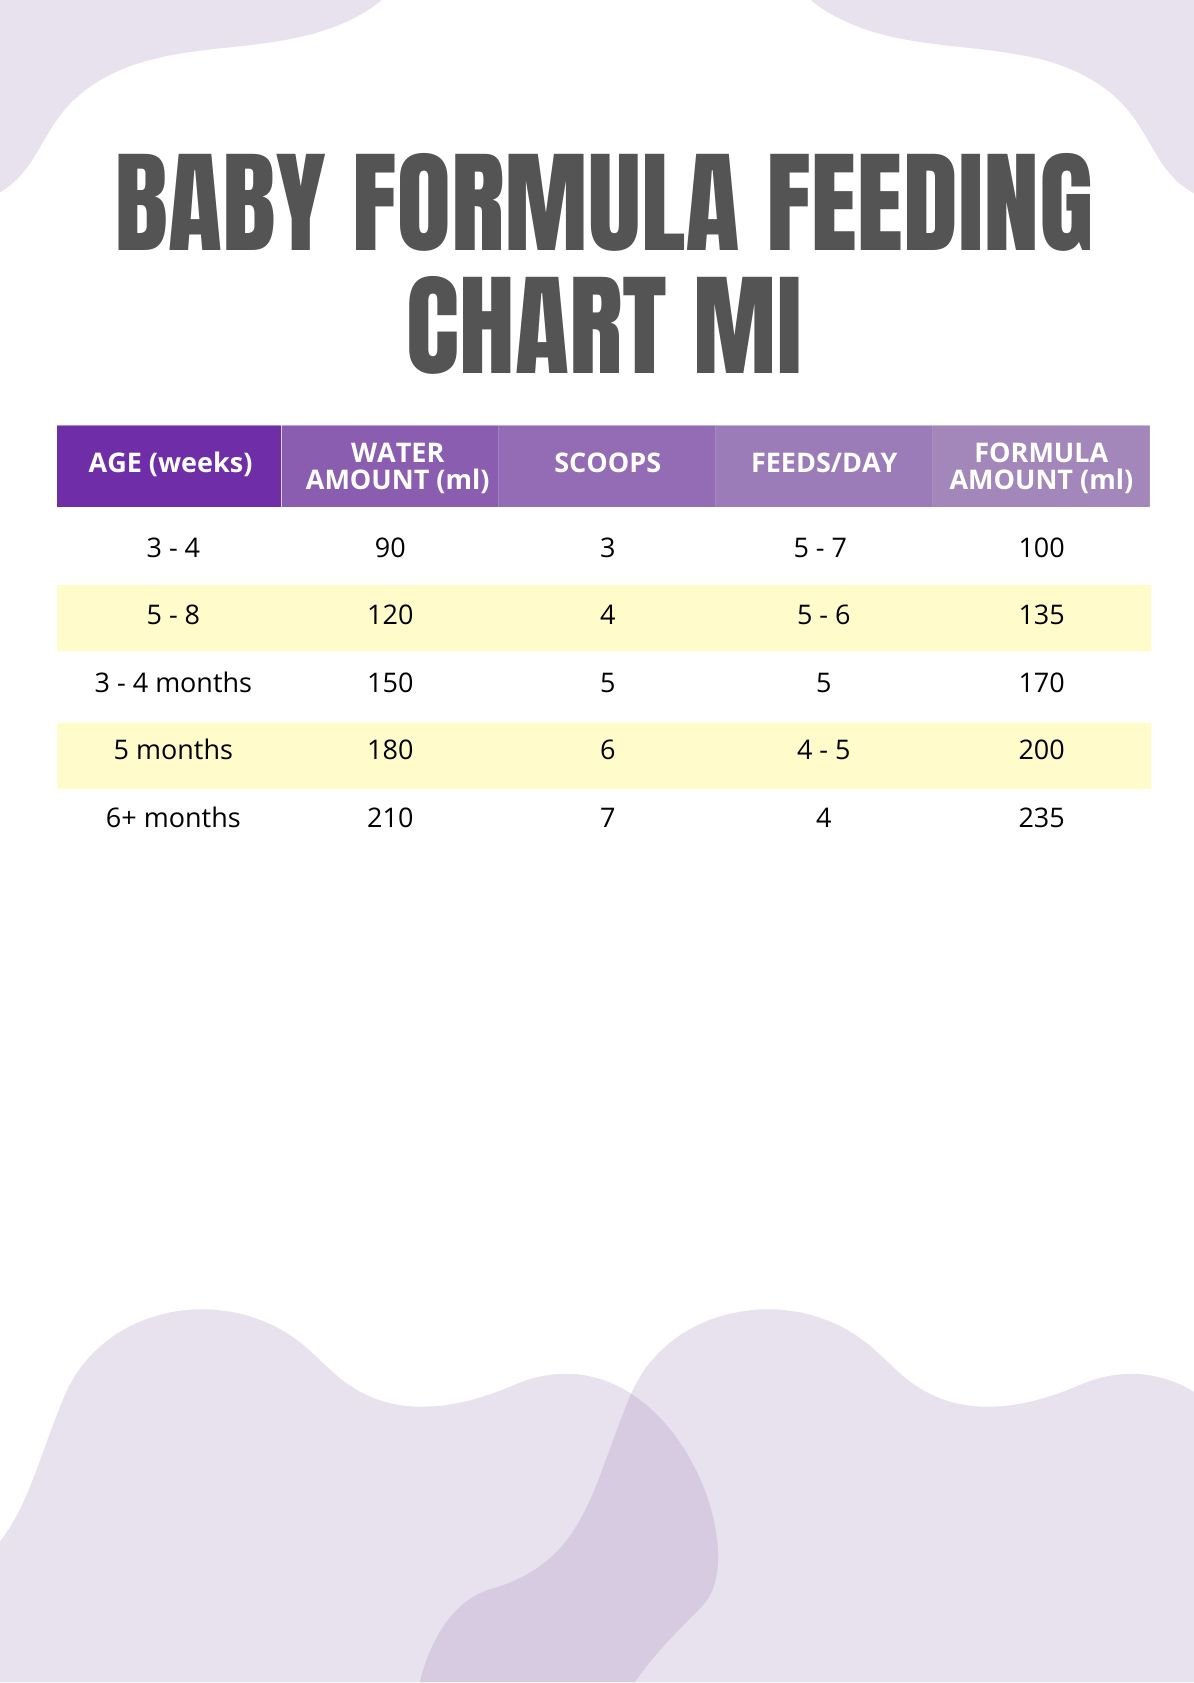 https://images.template.net/104546/Free-Baby-Formula-Feeding-Chart-Ml.jpeg